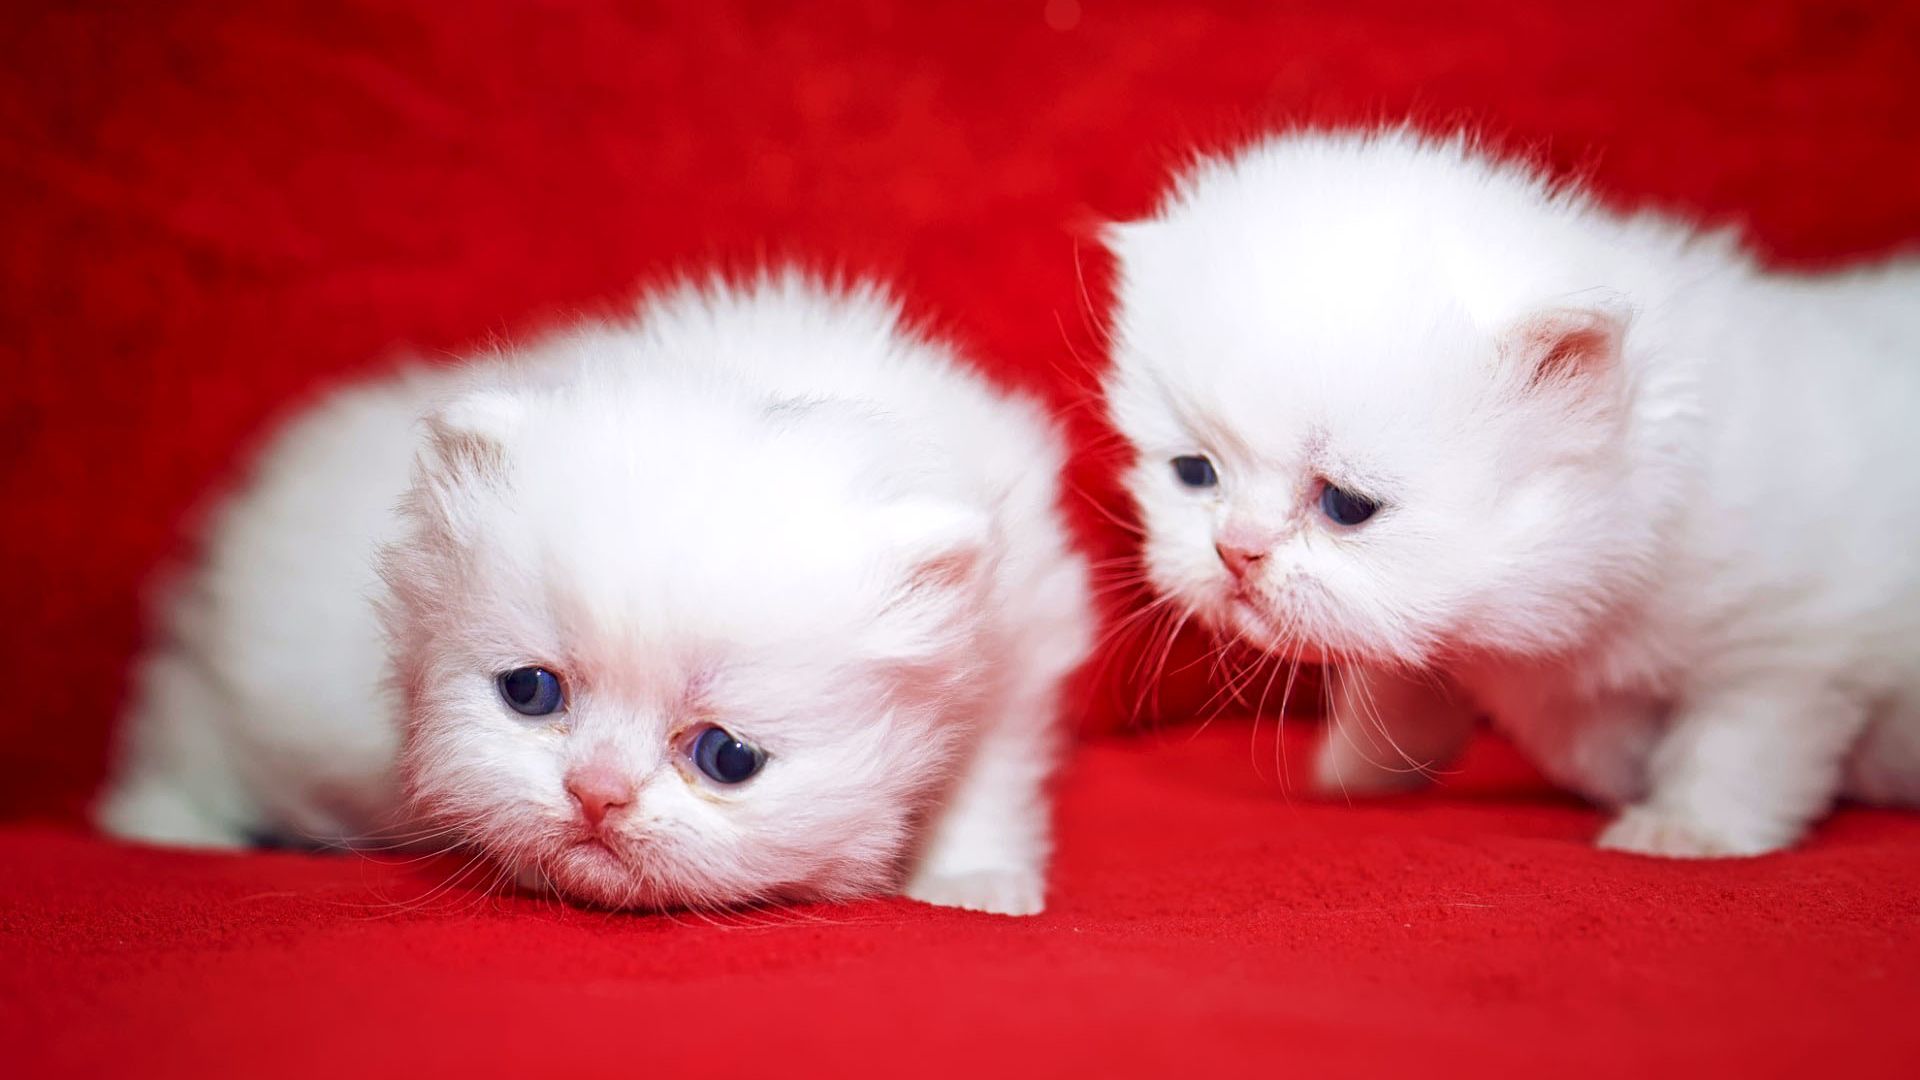 Desktop Wallpaper Cute White Kittens, Hd Image, Picture, Background, Upm6s9